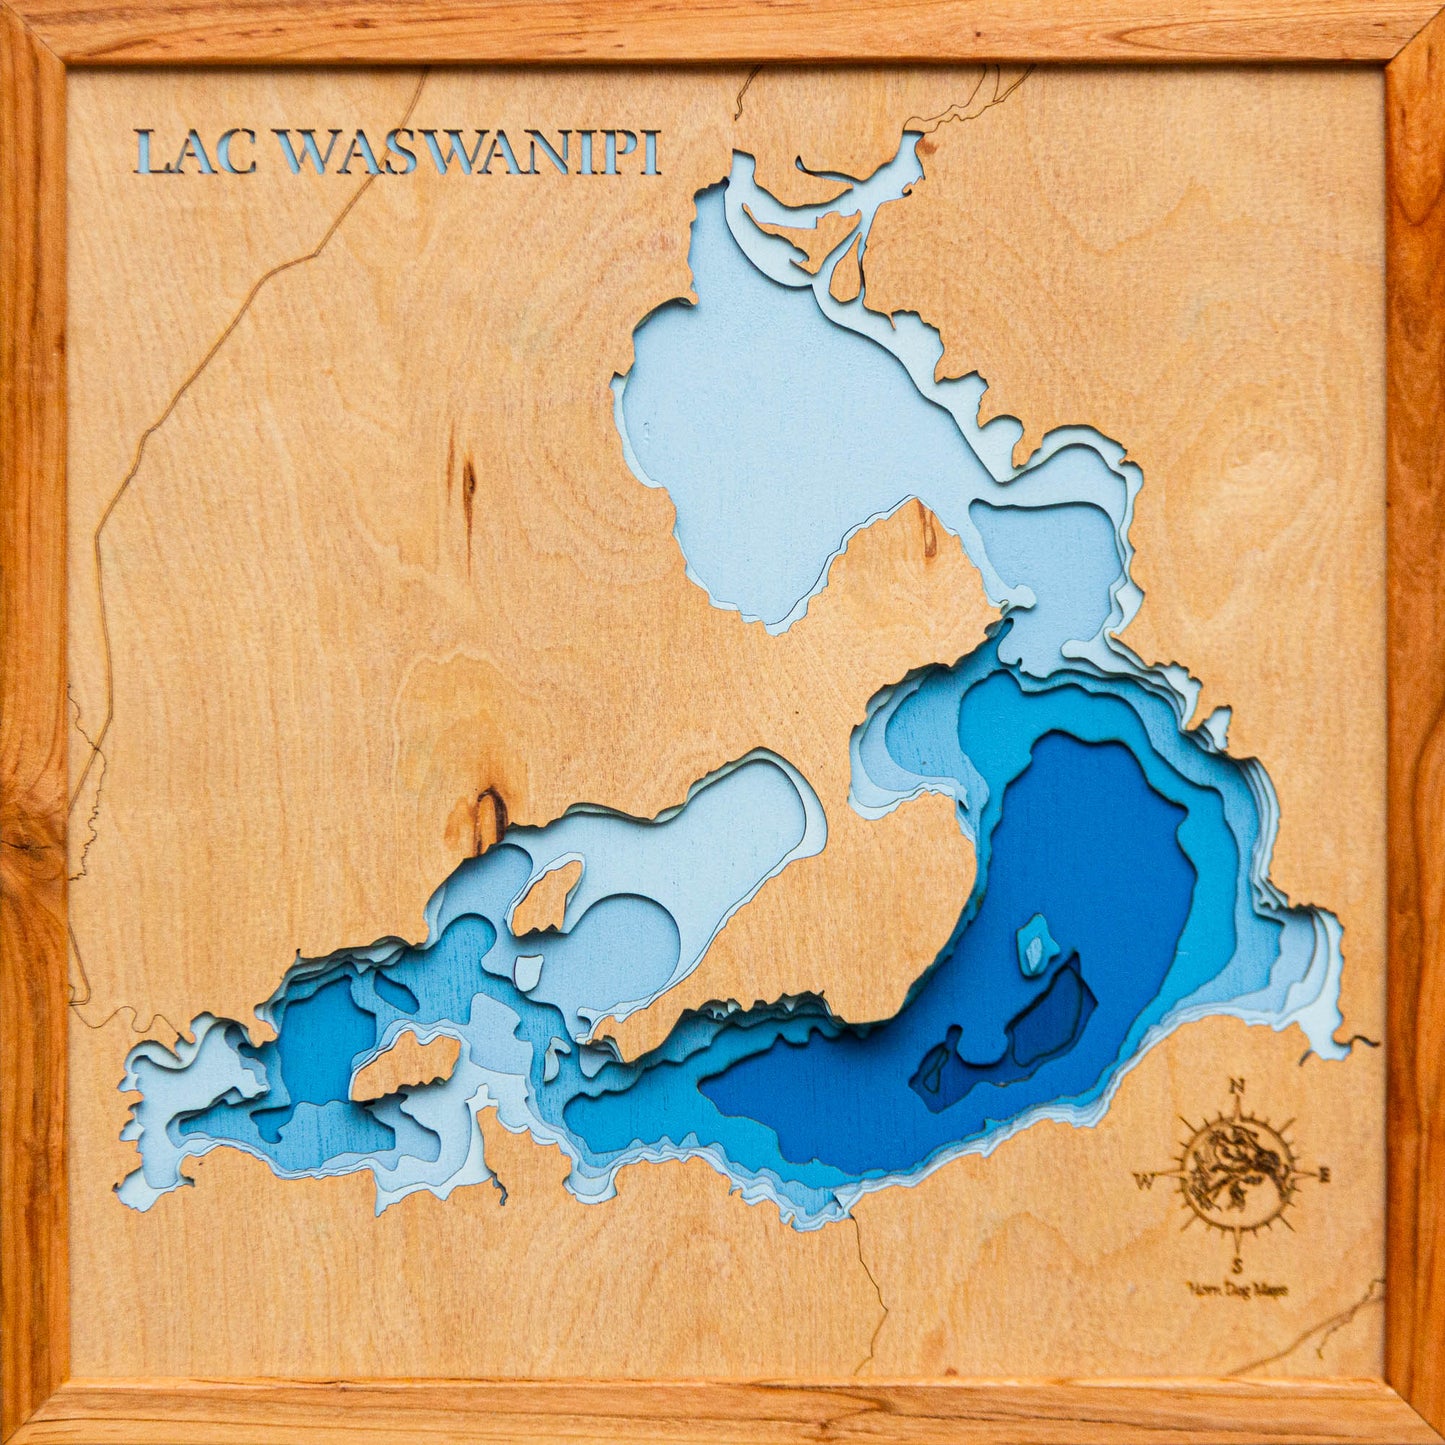 Lac Waswanipi in Quebec, Canada